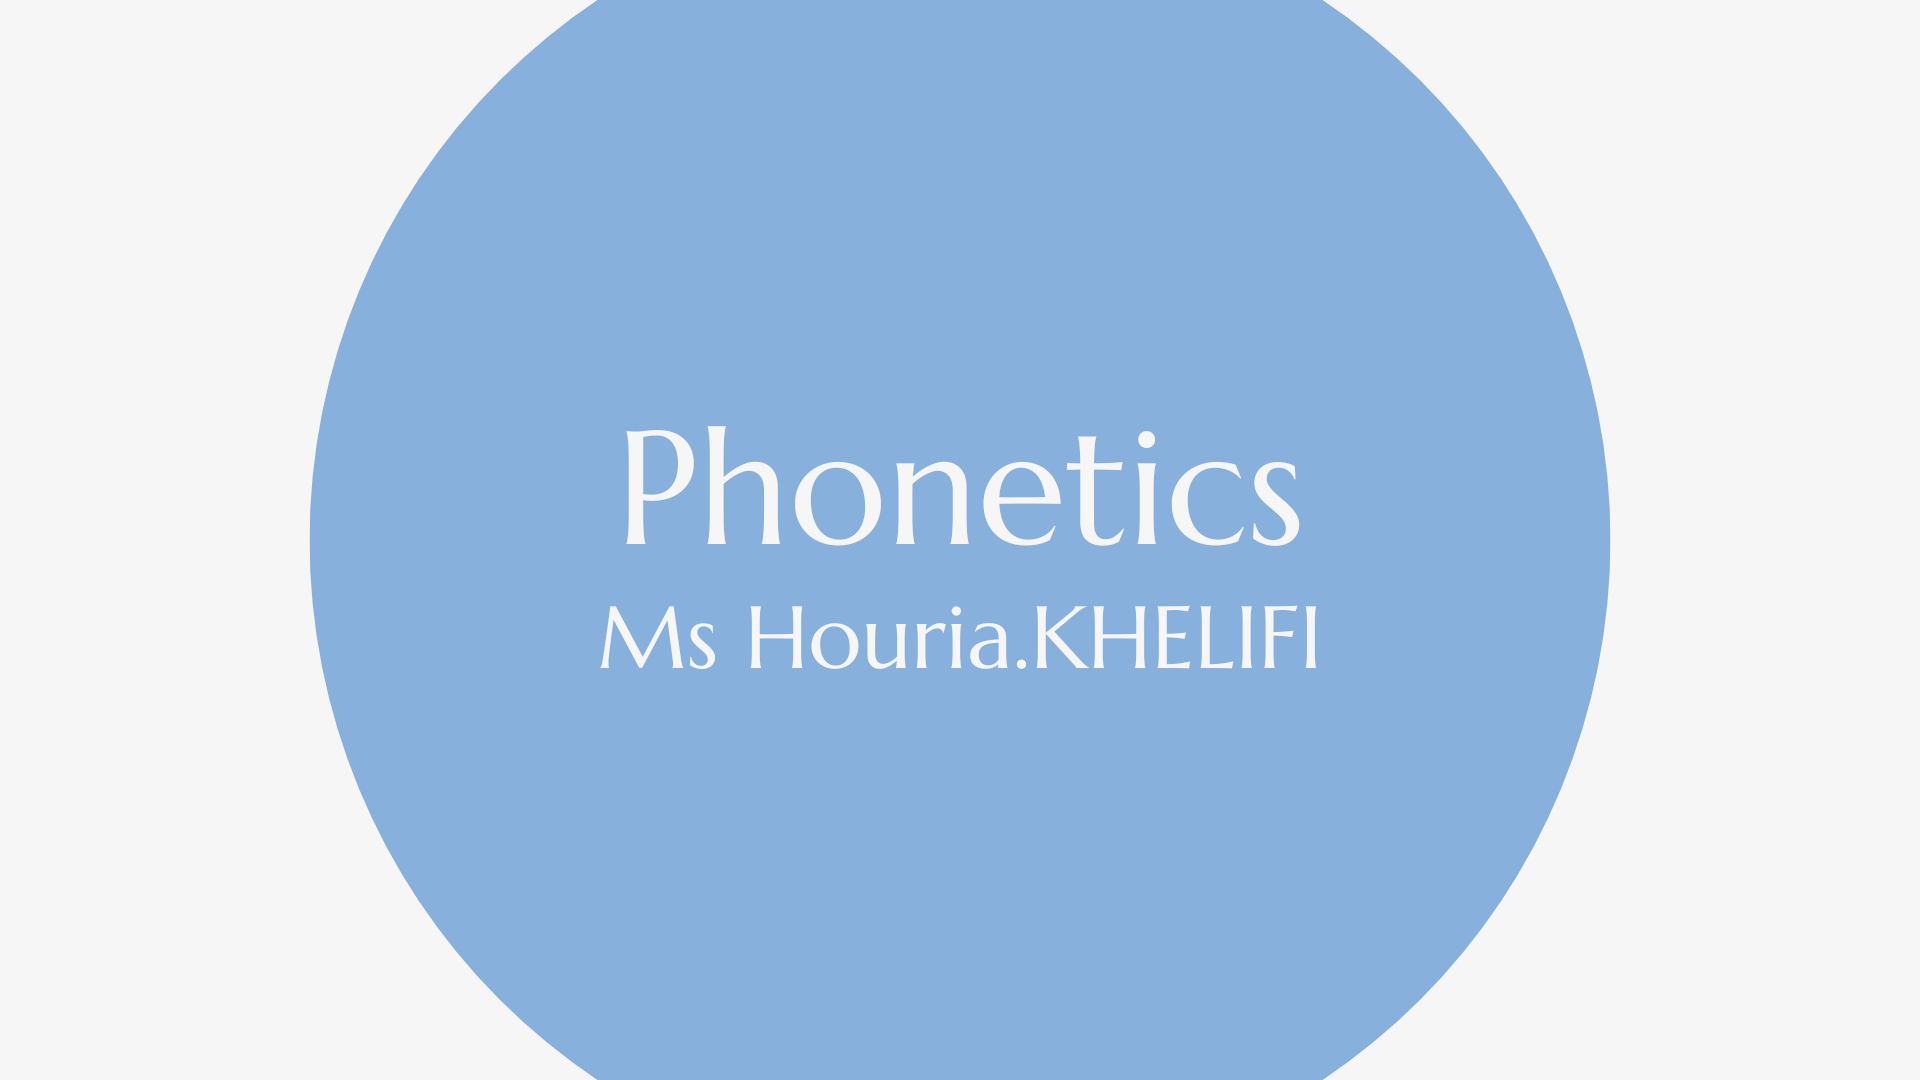 Corrective & Articulatory Phonetics